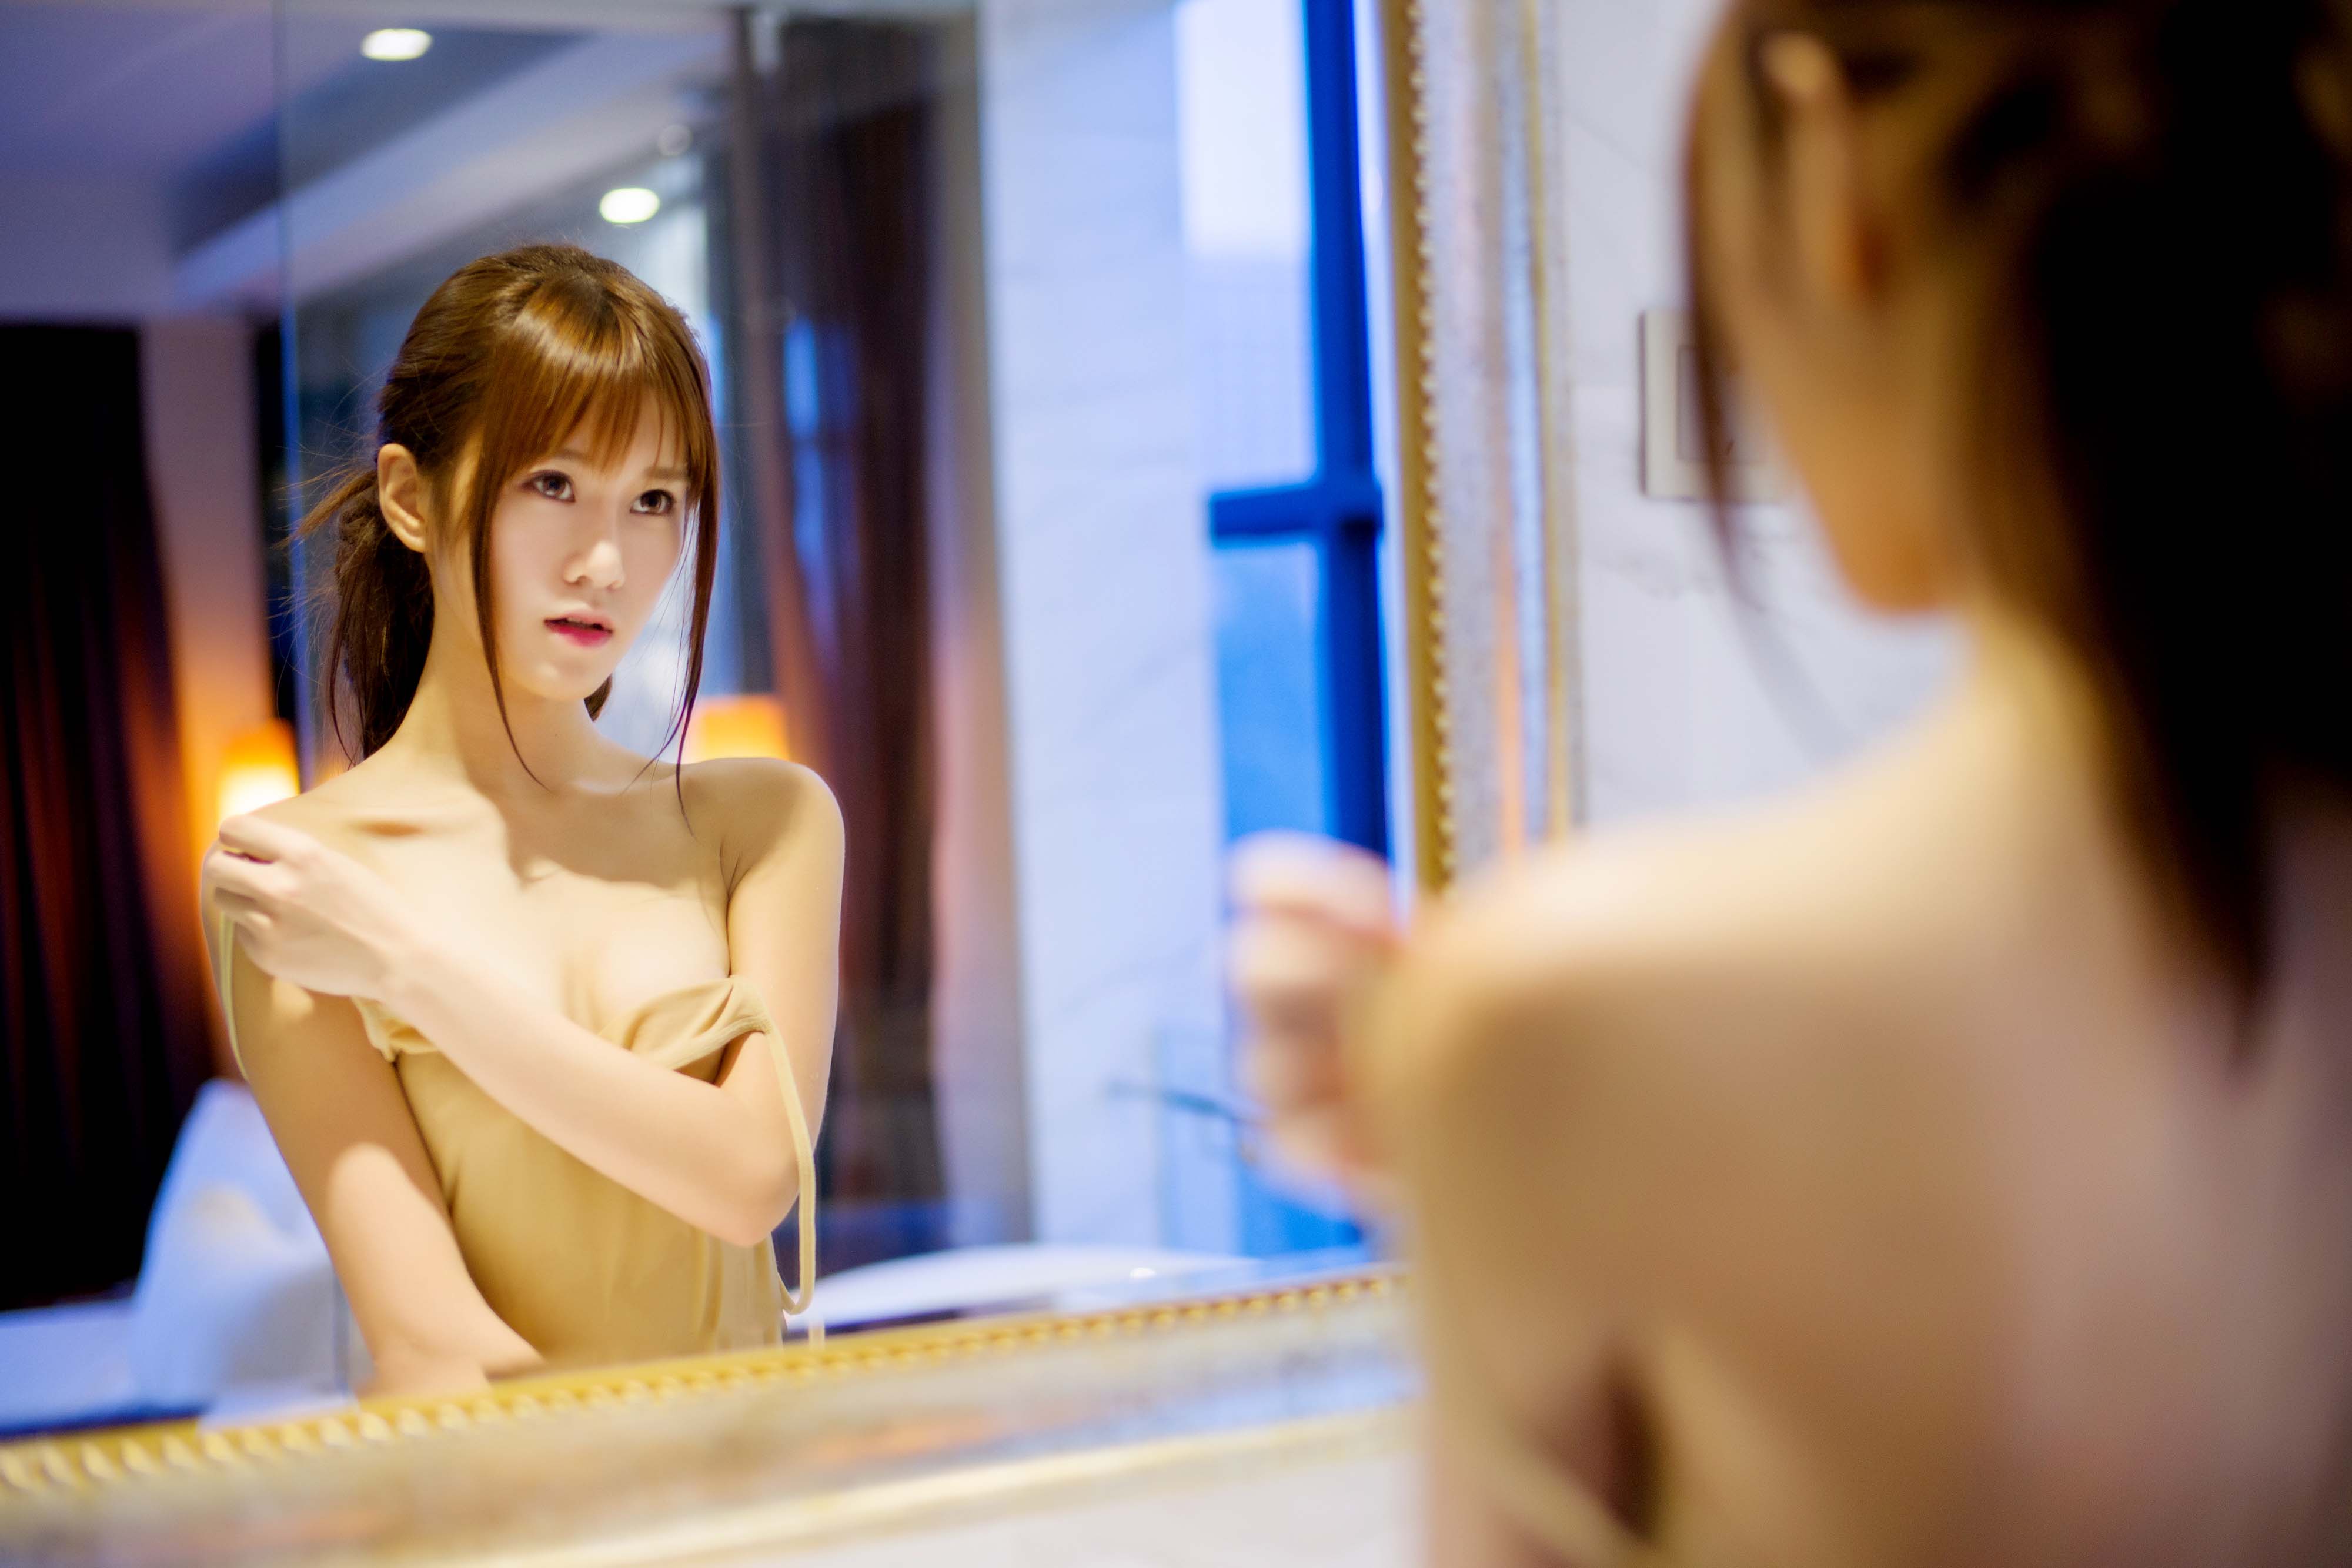 mirror-girl-shower